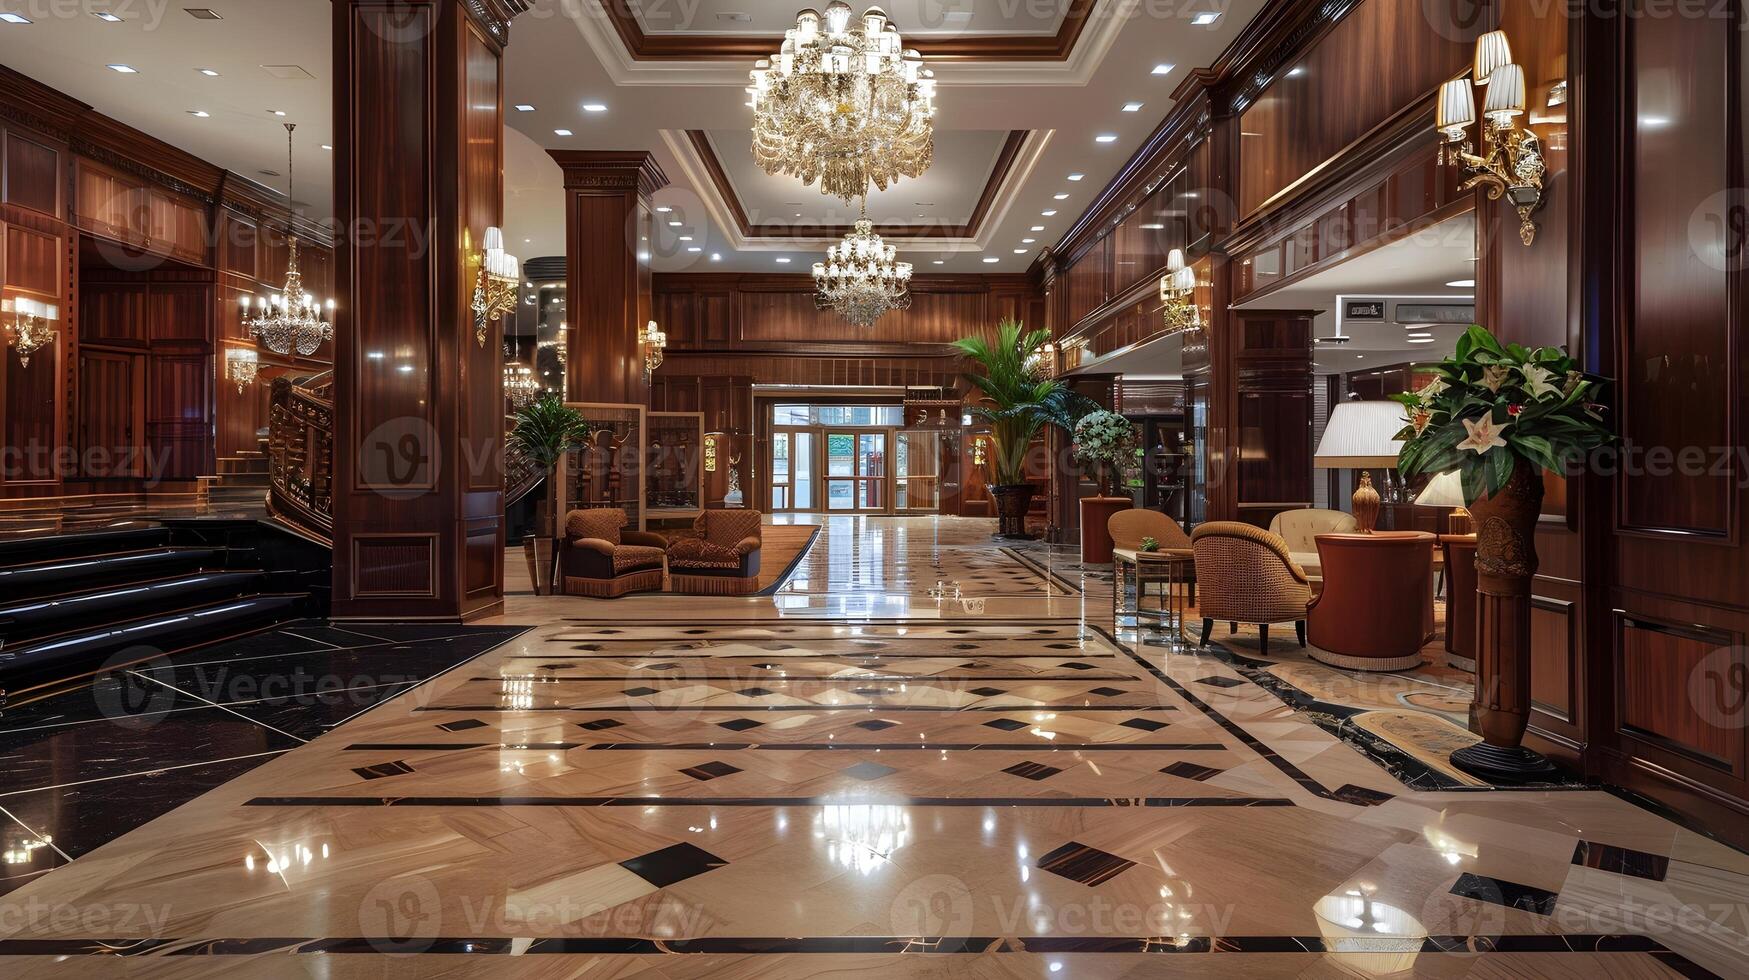 Grandiose Lobby of a Prestigious Luxury Hotel with Ornate Architectural Details and Lavish Decor photo